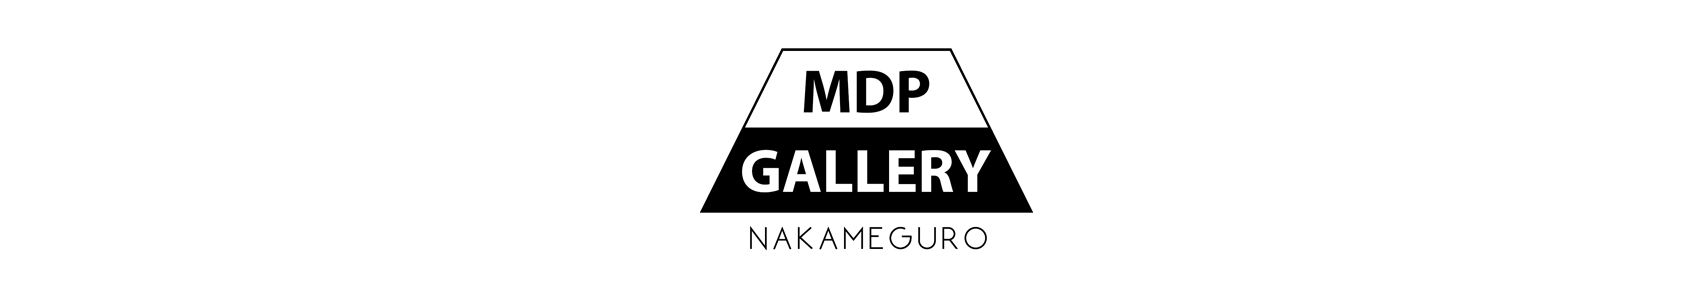 MDP GALLERY